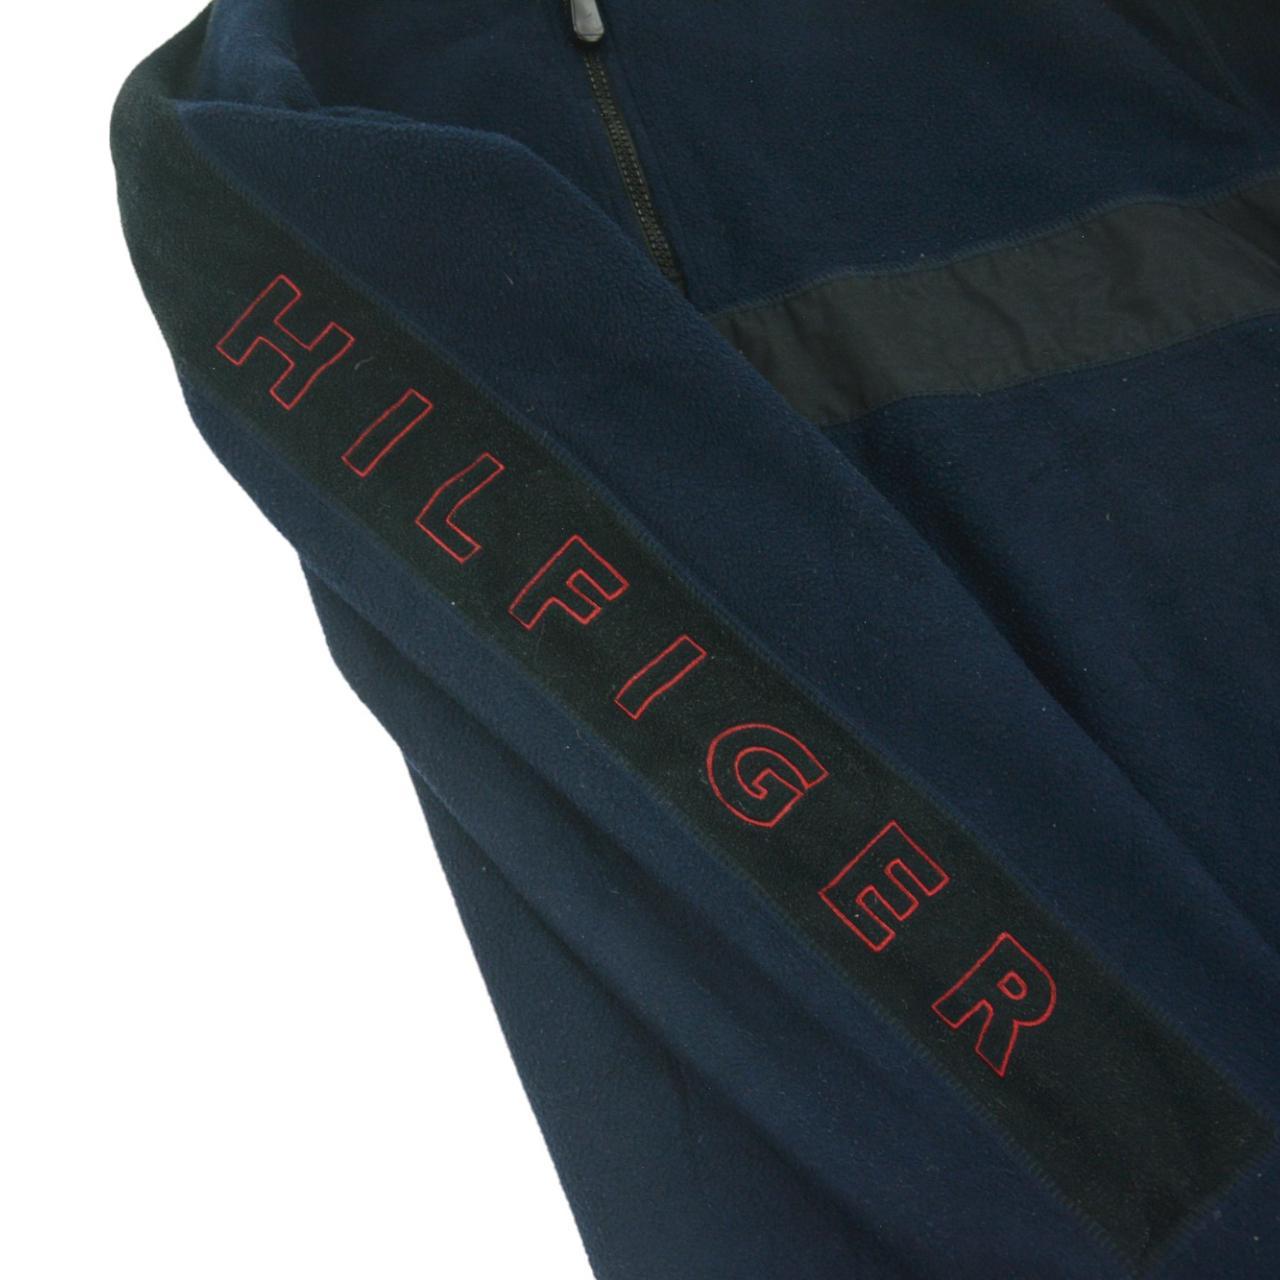 Vintage Tommy Hilfiger Q Zip Fleece Jumper Size M